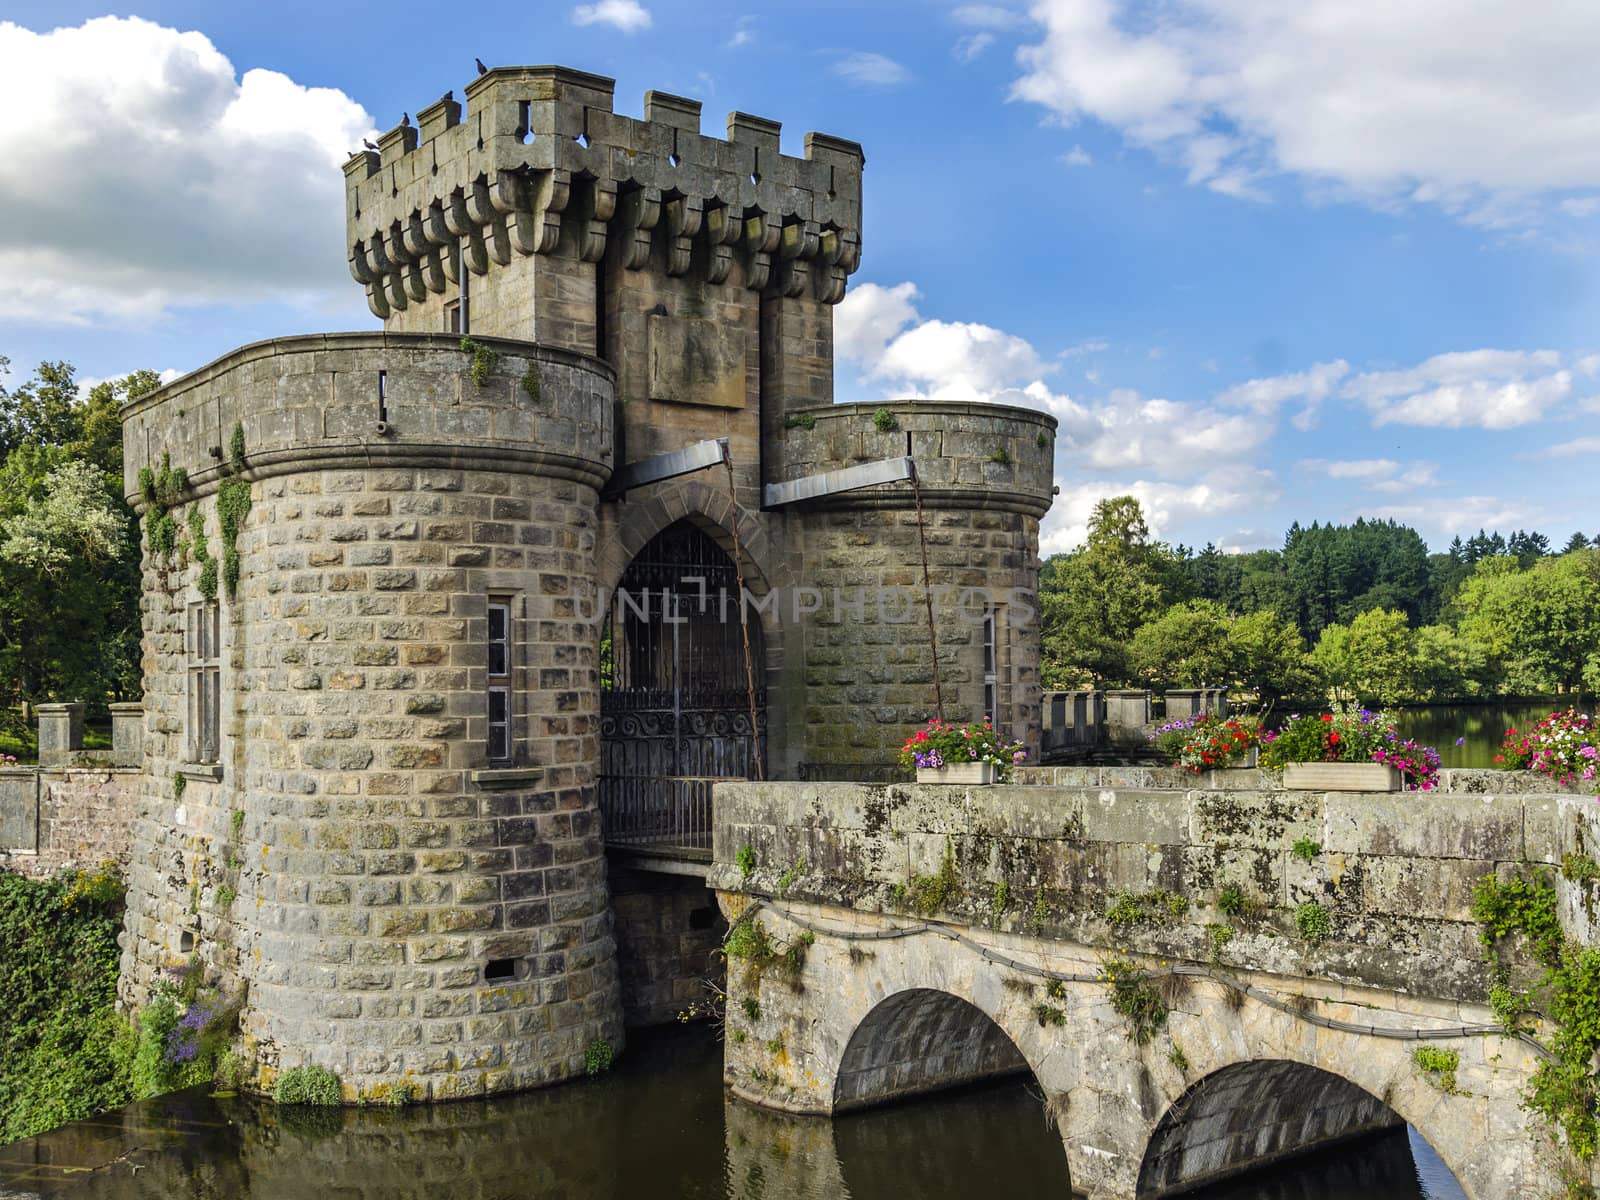 Drawbridge gates of Chateau de la Clayette, Burgundy, France.